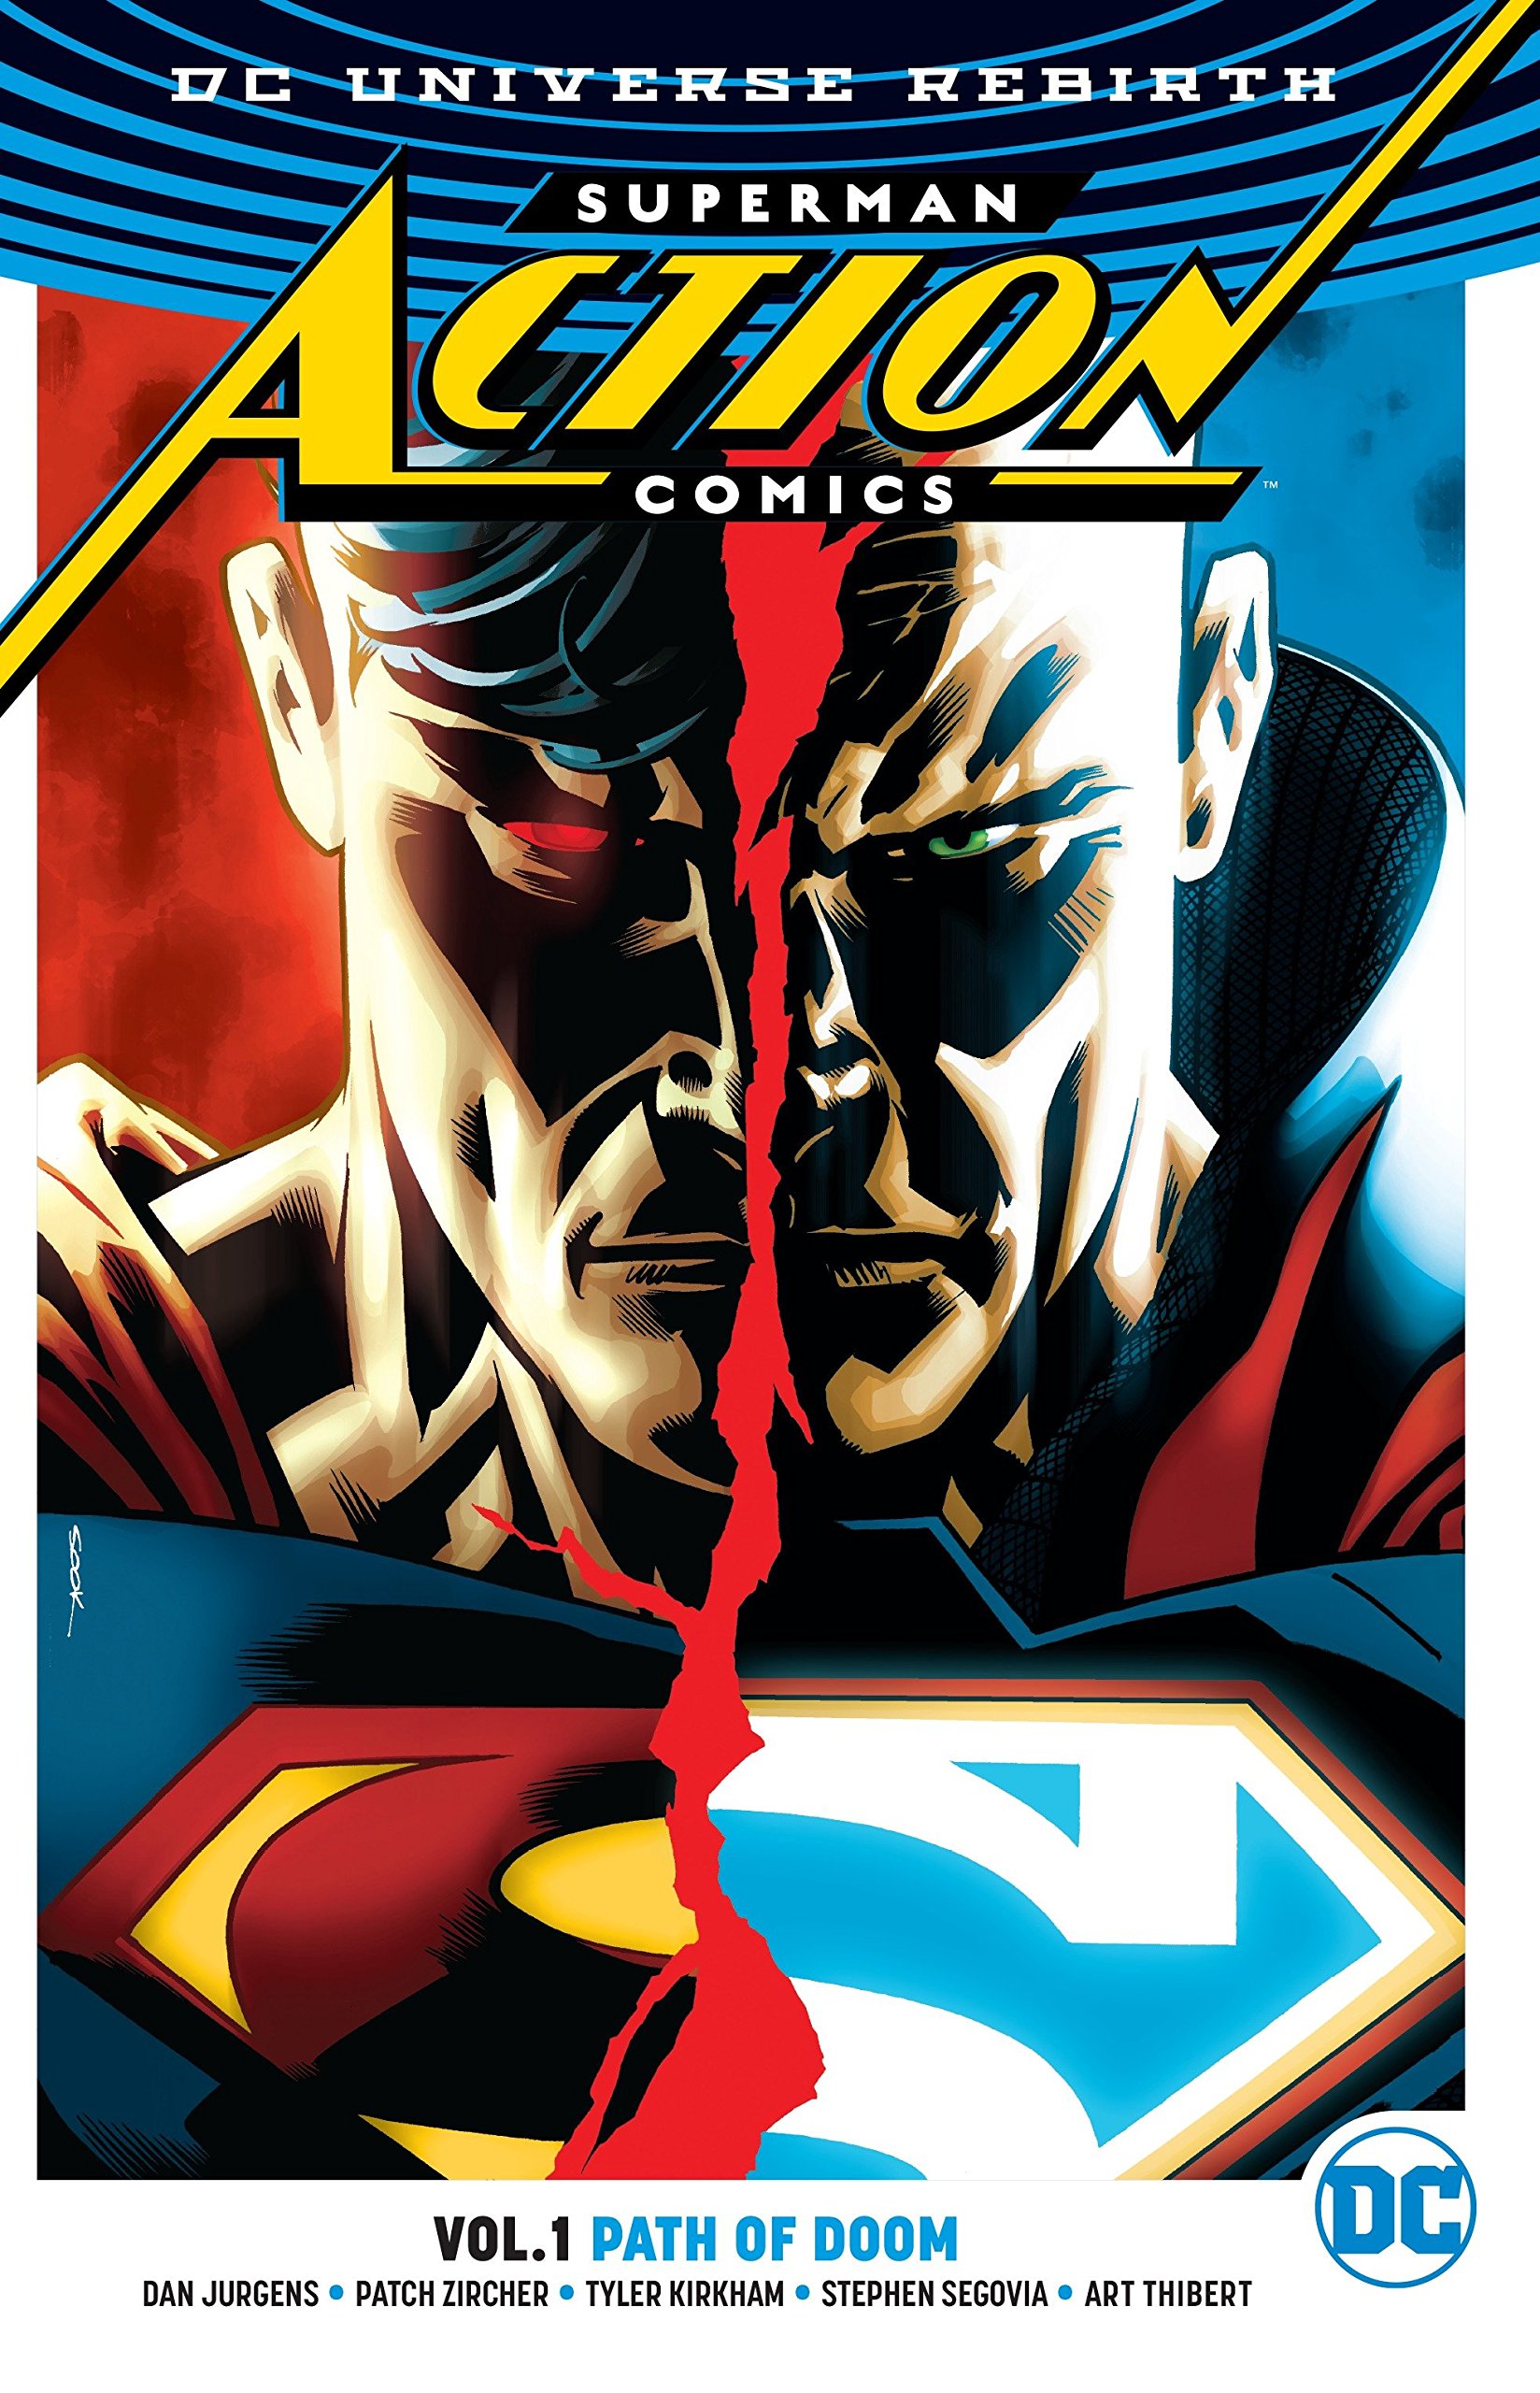 Vacunar perjudicar Canadá Buy Superman Action Comics Graphic Novel Volume 1 Path of Doom (Rebirth) |  Arsenal Comics and Games